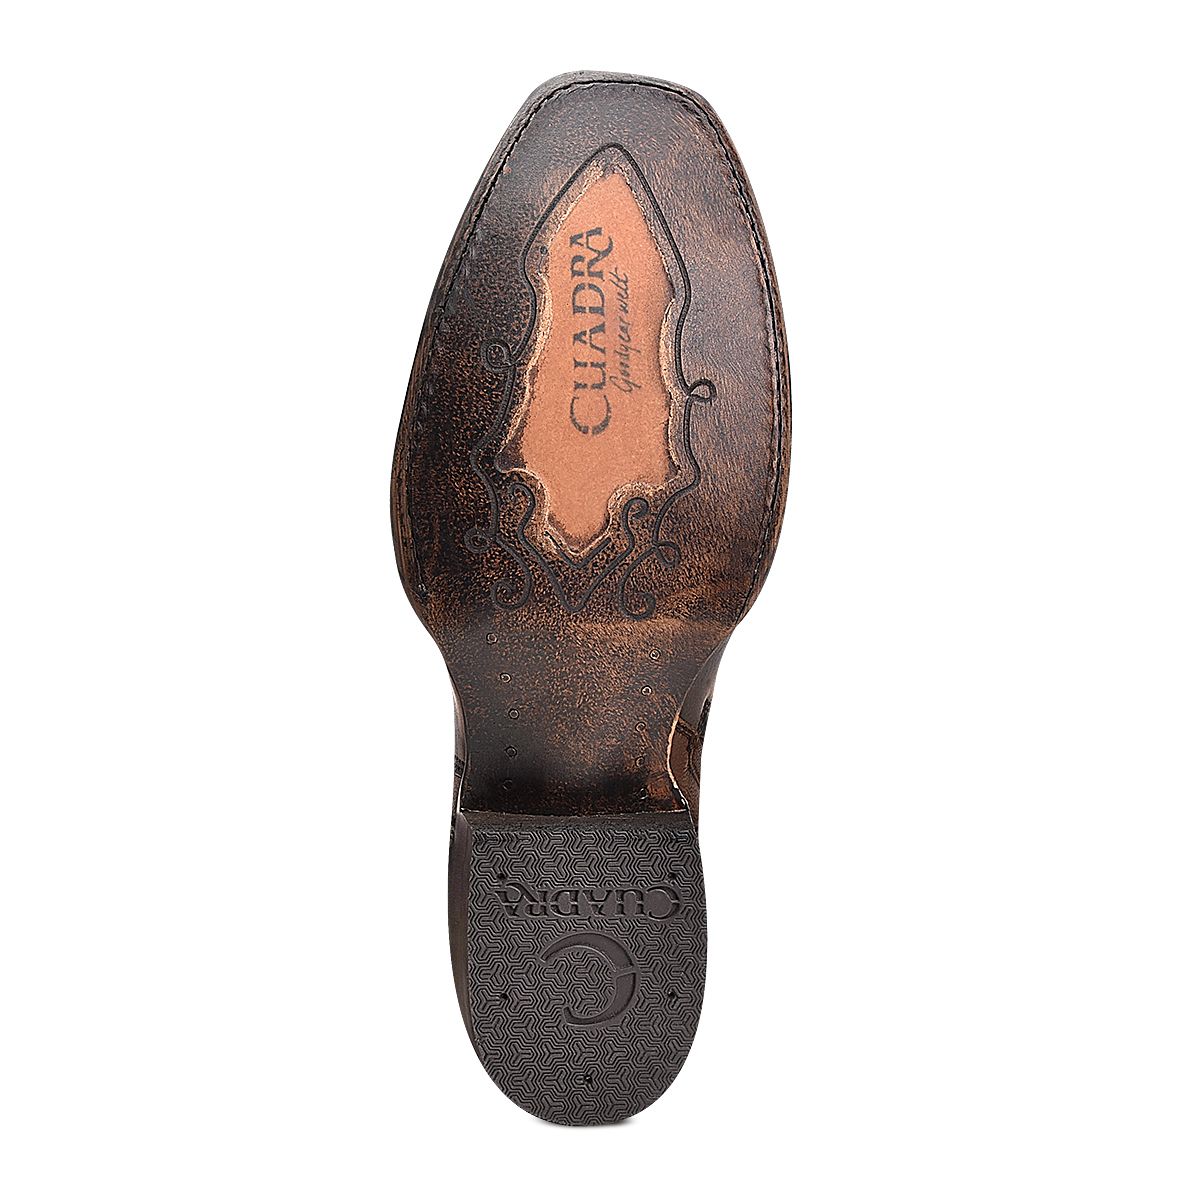 1J06MK - Cuadra mocha casual fashion cowhide leather ankle boots for men-Kuet.us